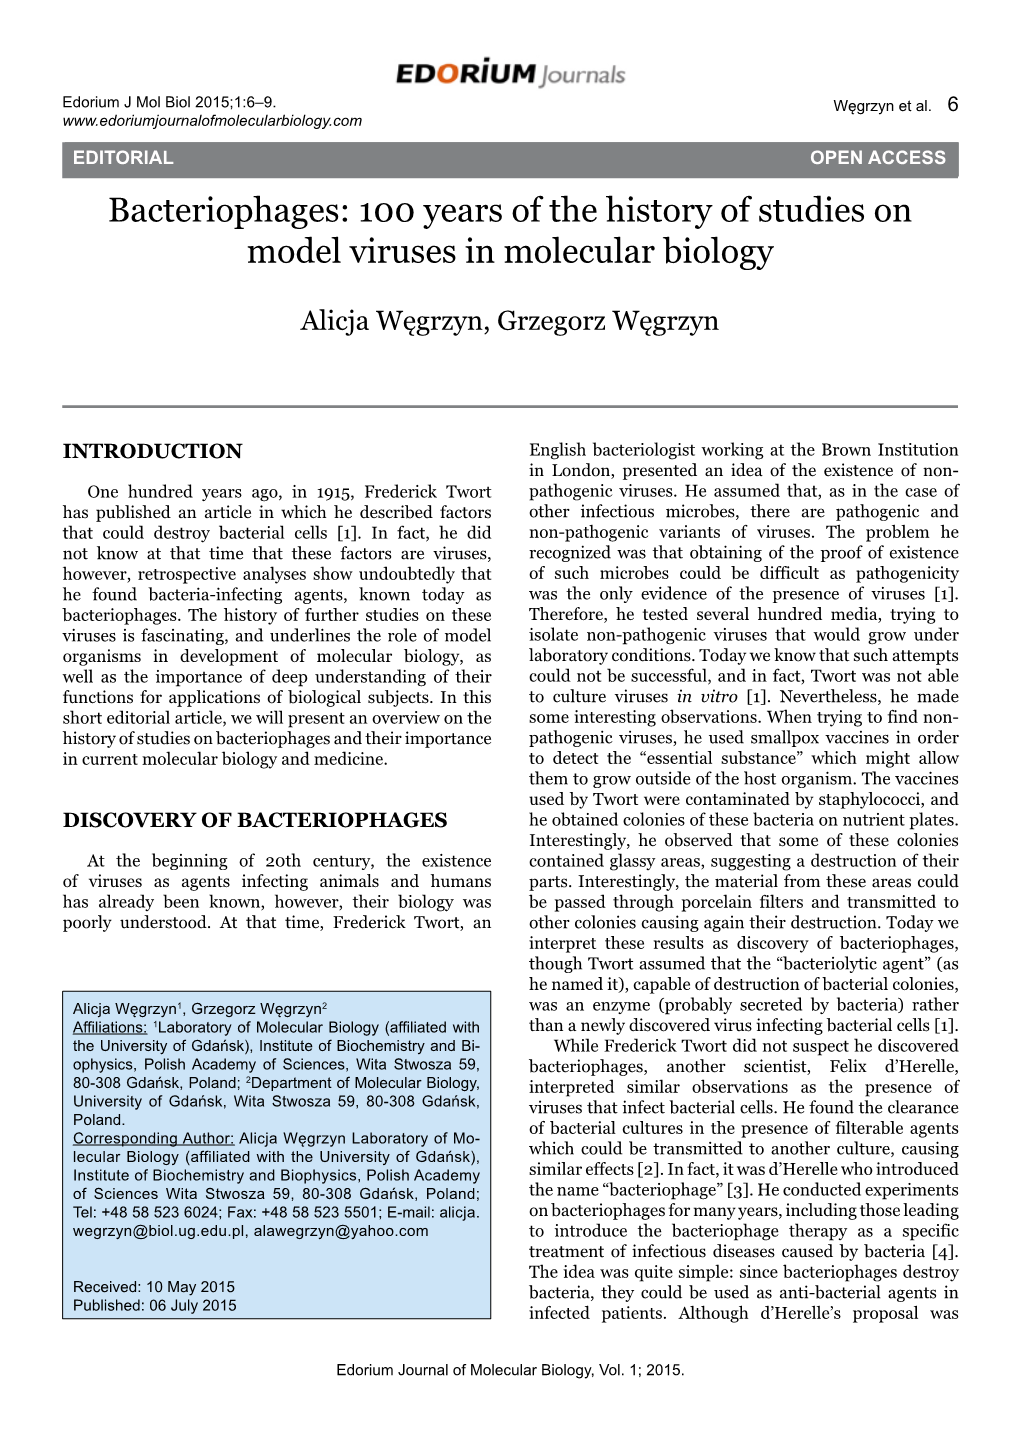 Bacteriophages: 100 Years of the History of Studies on Model Viruses in Molecular Biology